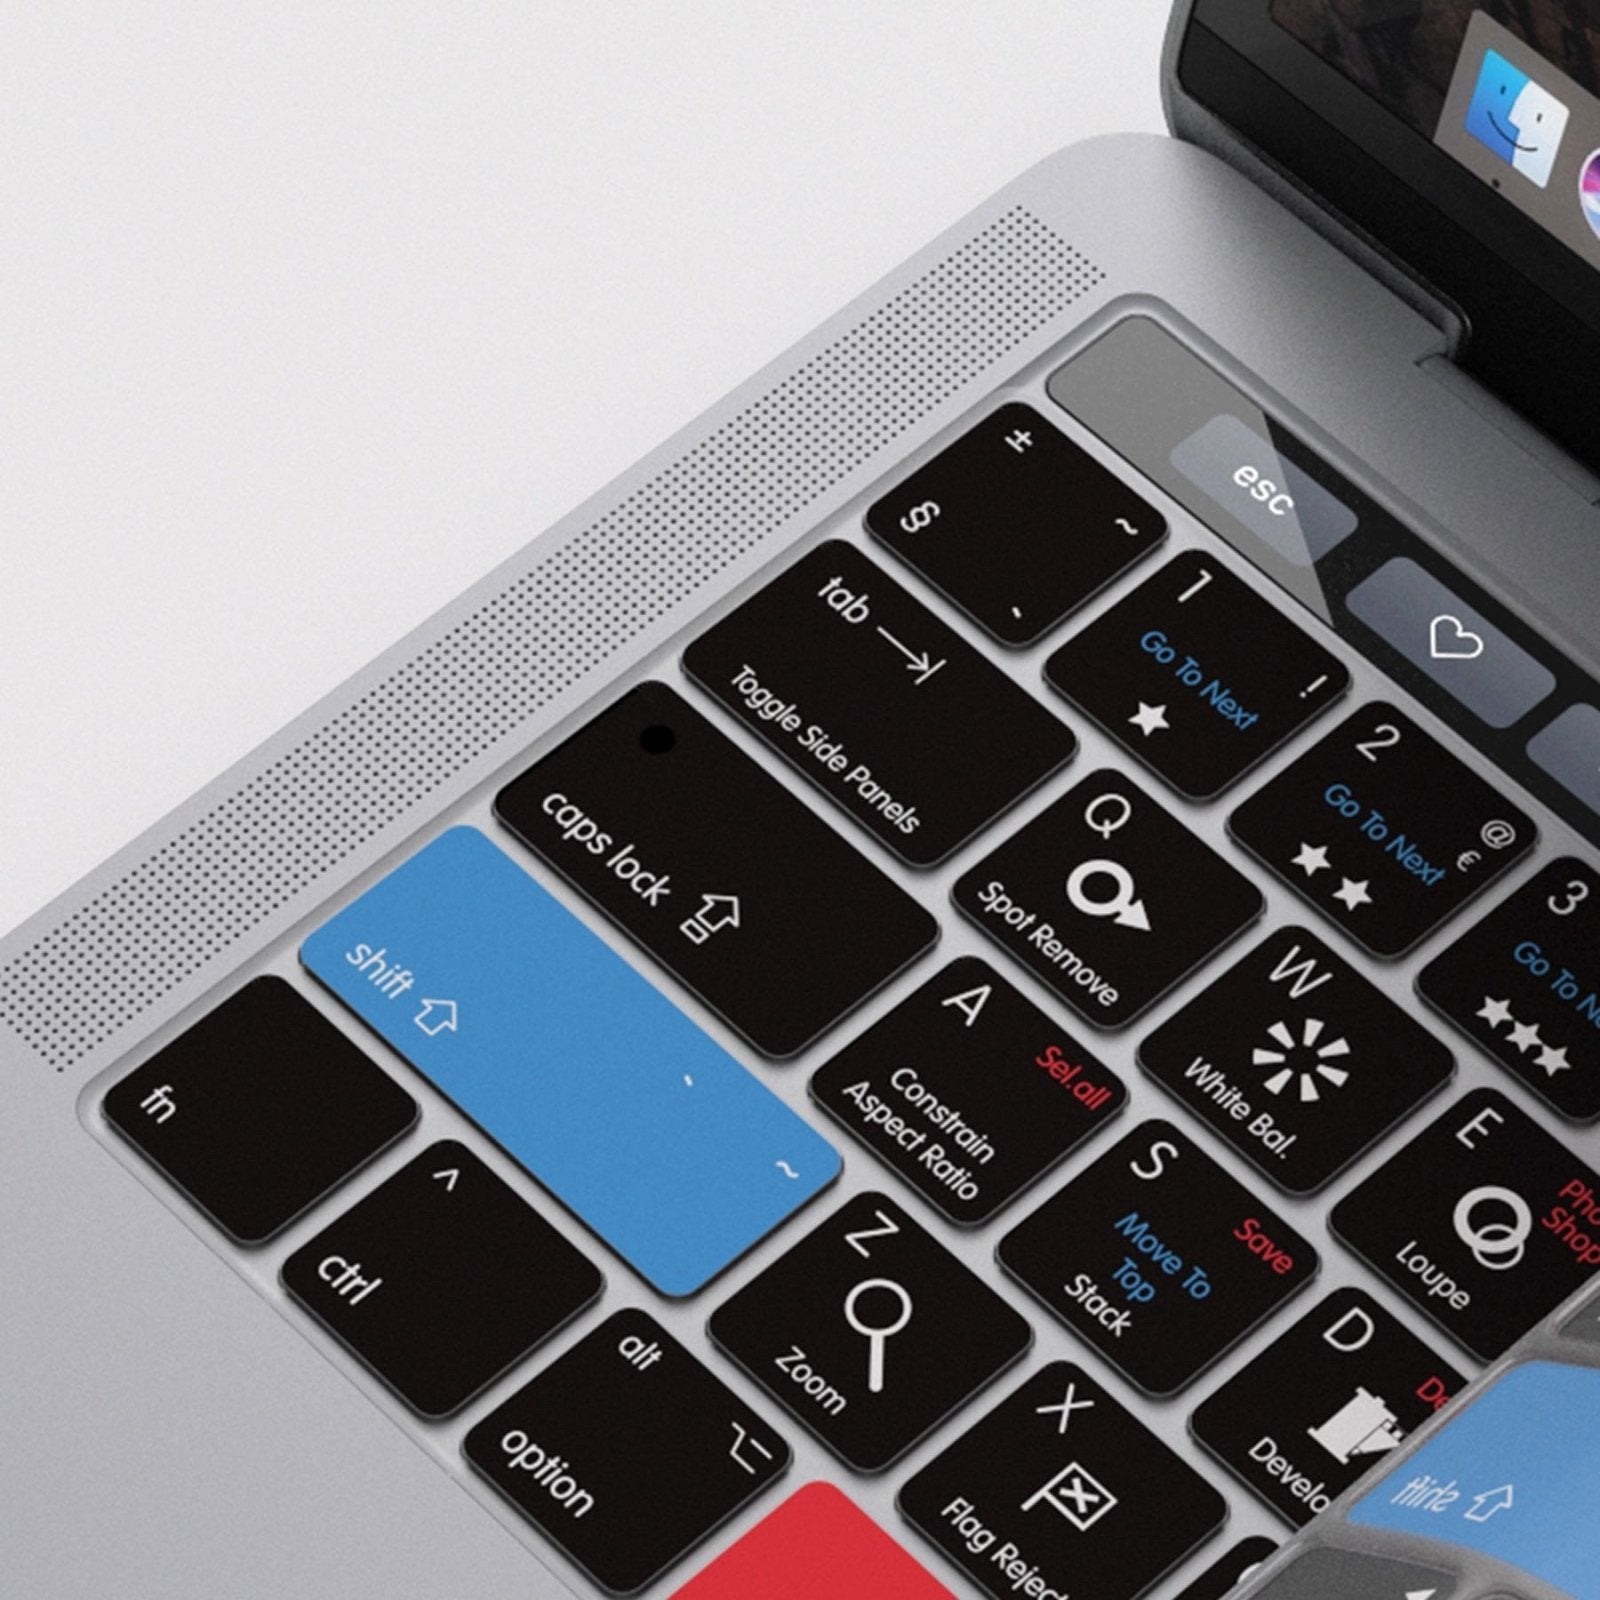 Adobe Lightroom Keyboard Covers for MacBook and iMac - Editors Keys